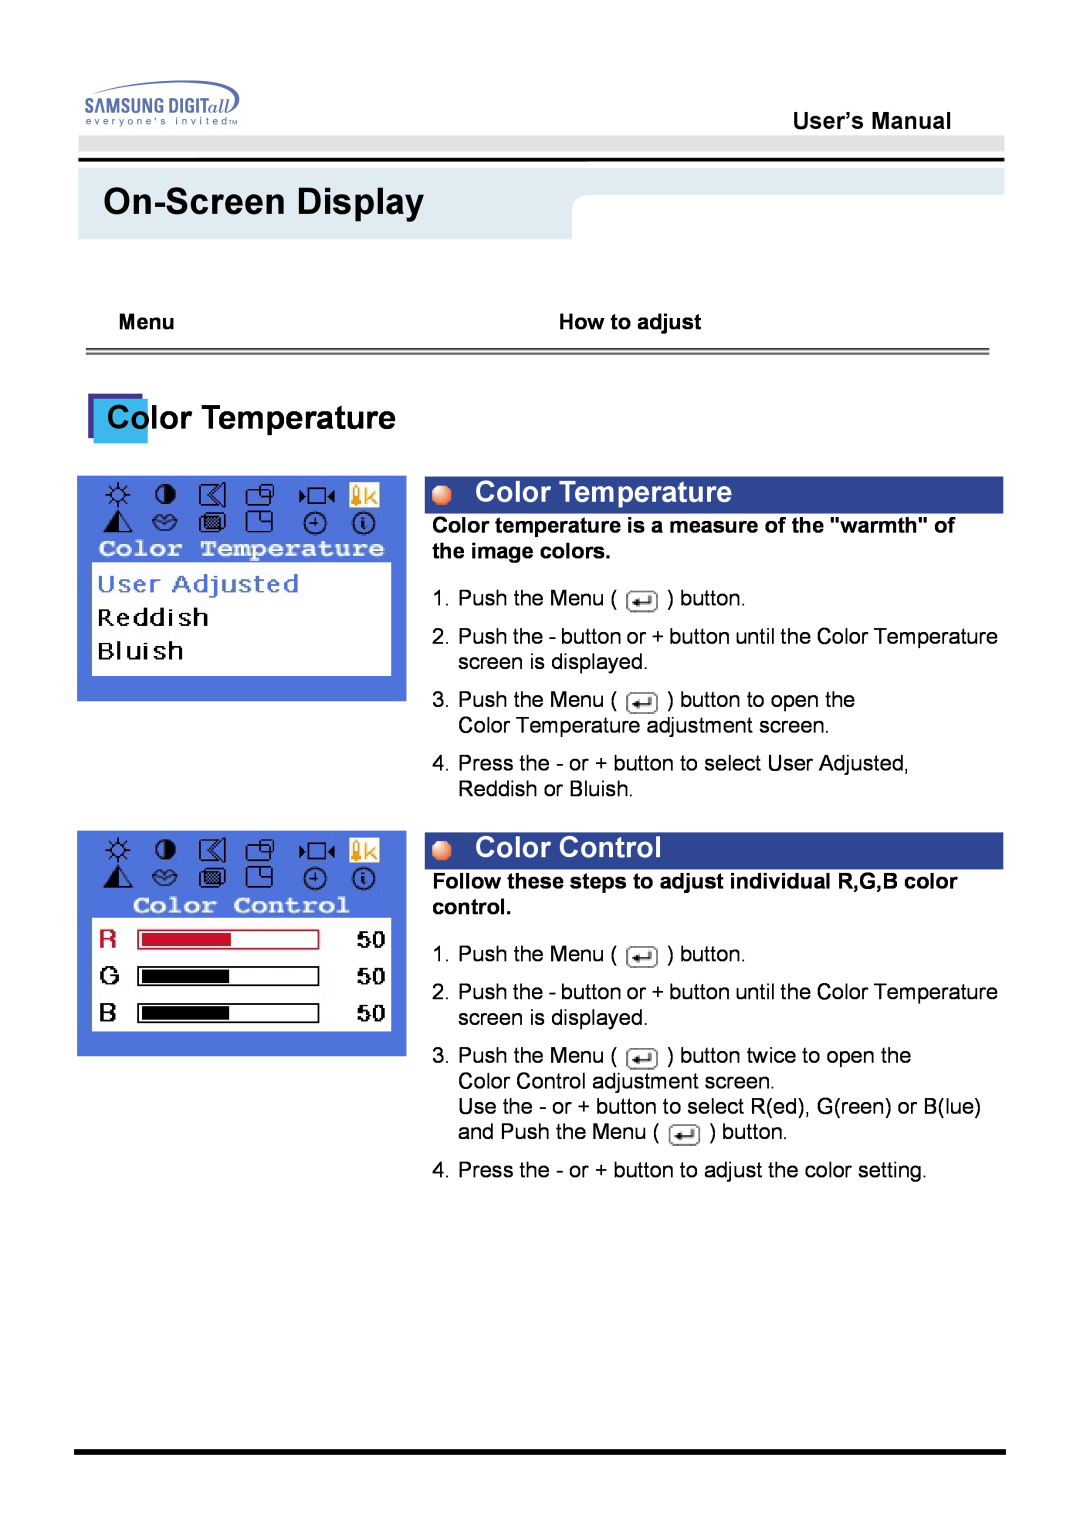 Samsung 760TFT manual On-Screen Display, Color Temperature, Color Control, User’s Manual, Menu, How to adjust 